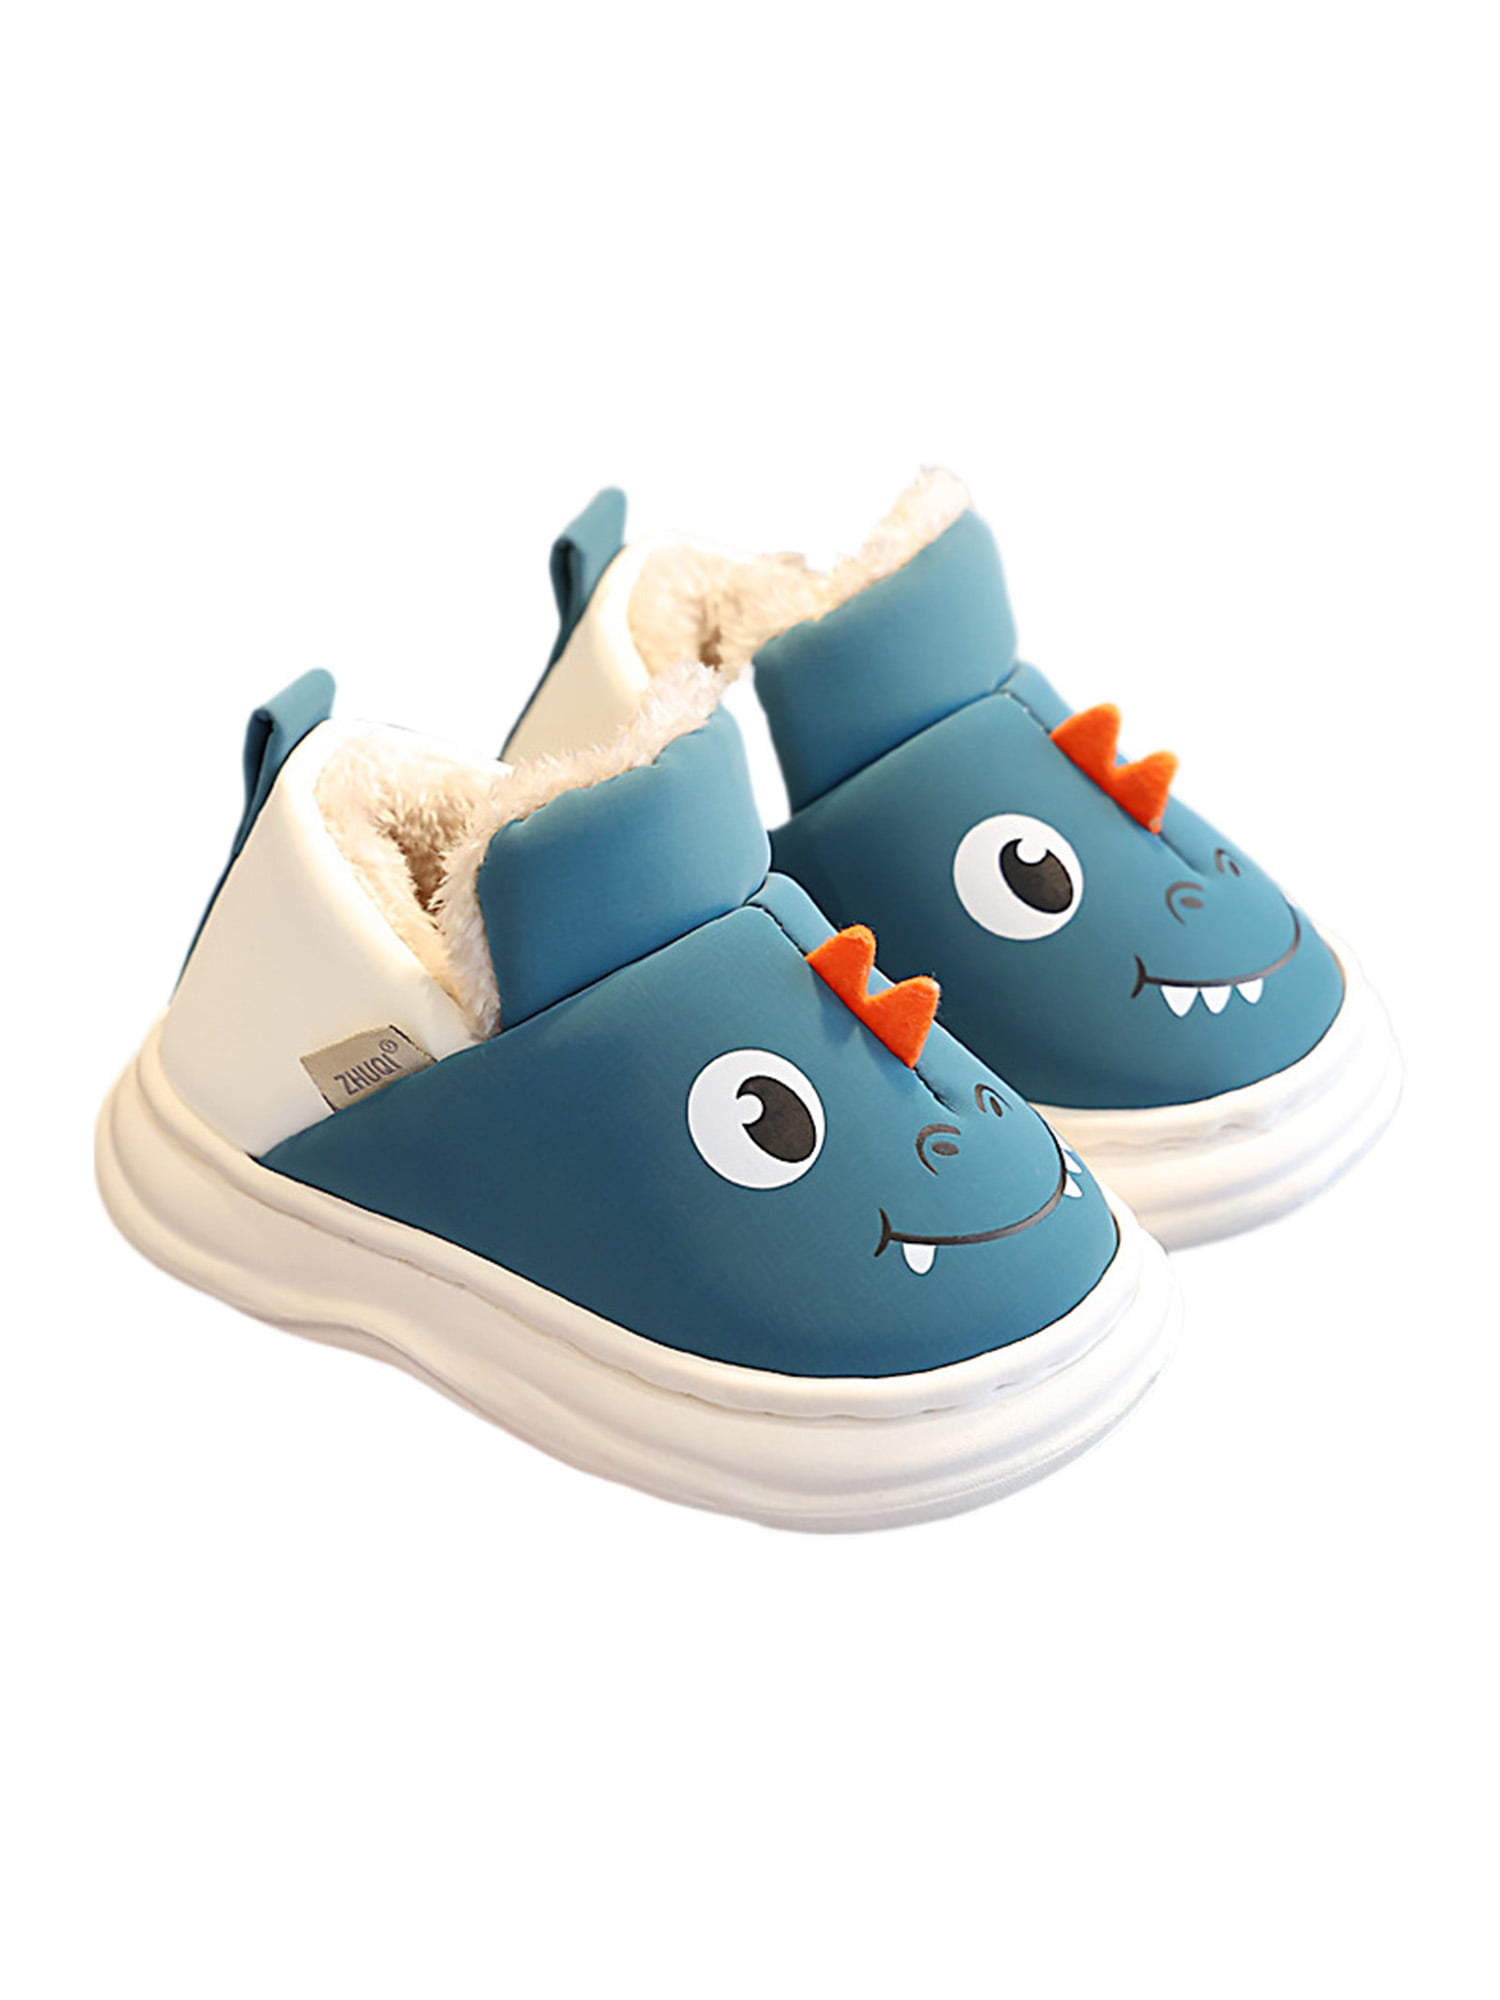 Daeful Girls Boys Fuzzy Slippers Fluffy Plush Slipper Cartoon Home Shoes  Breathable Anti-Slip Warm Casual Shoe House Blue 10C-11C 